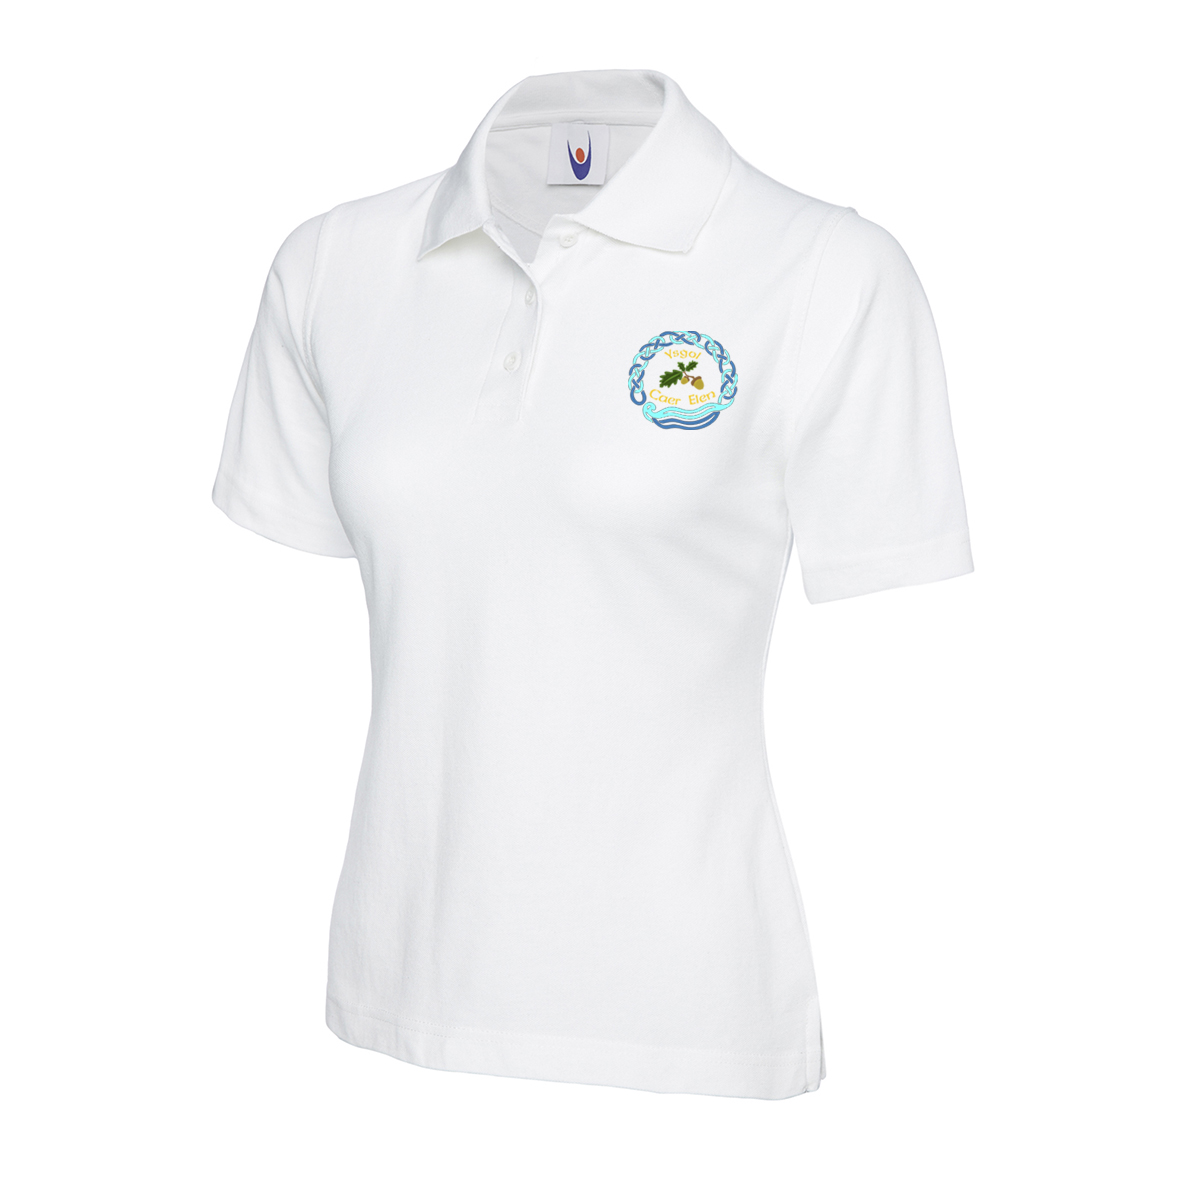 Ysgol Caer Elen Girls Fitted Summer Polo Shirt - Tees R Us Embroidery ...